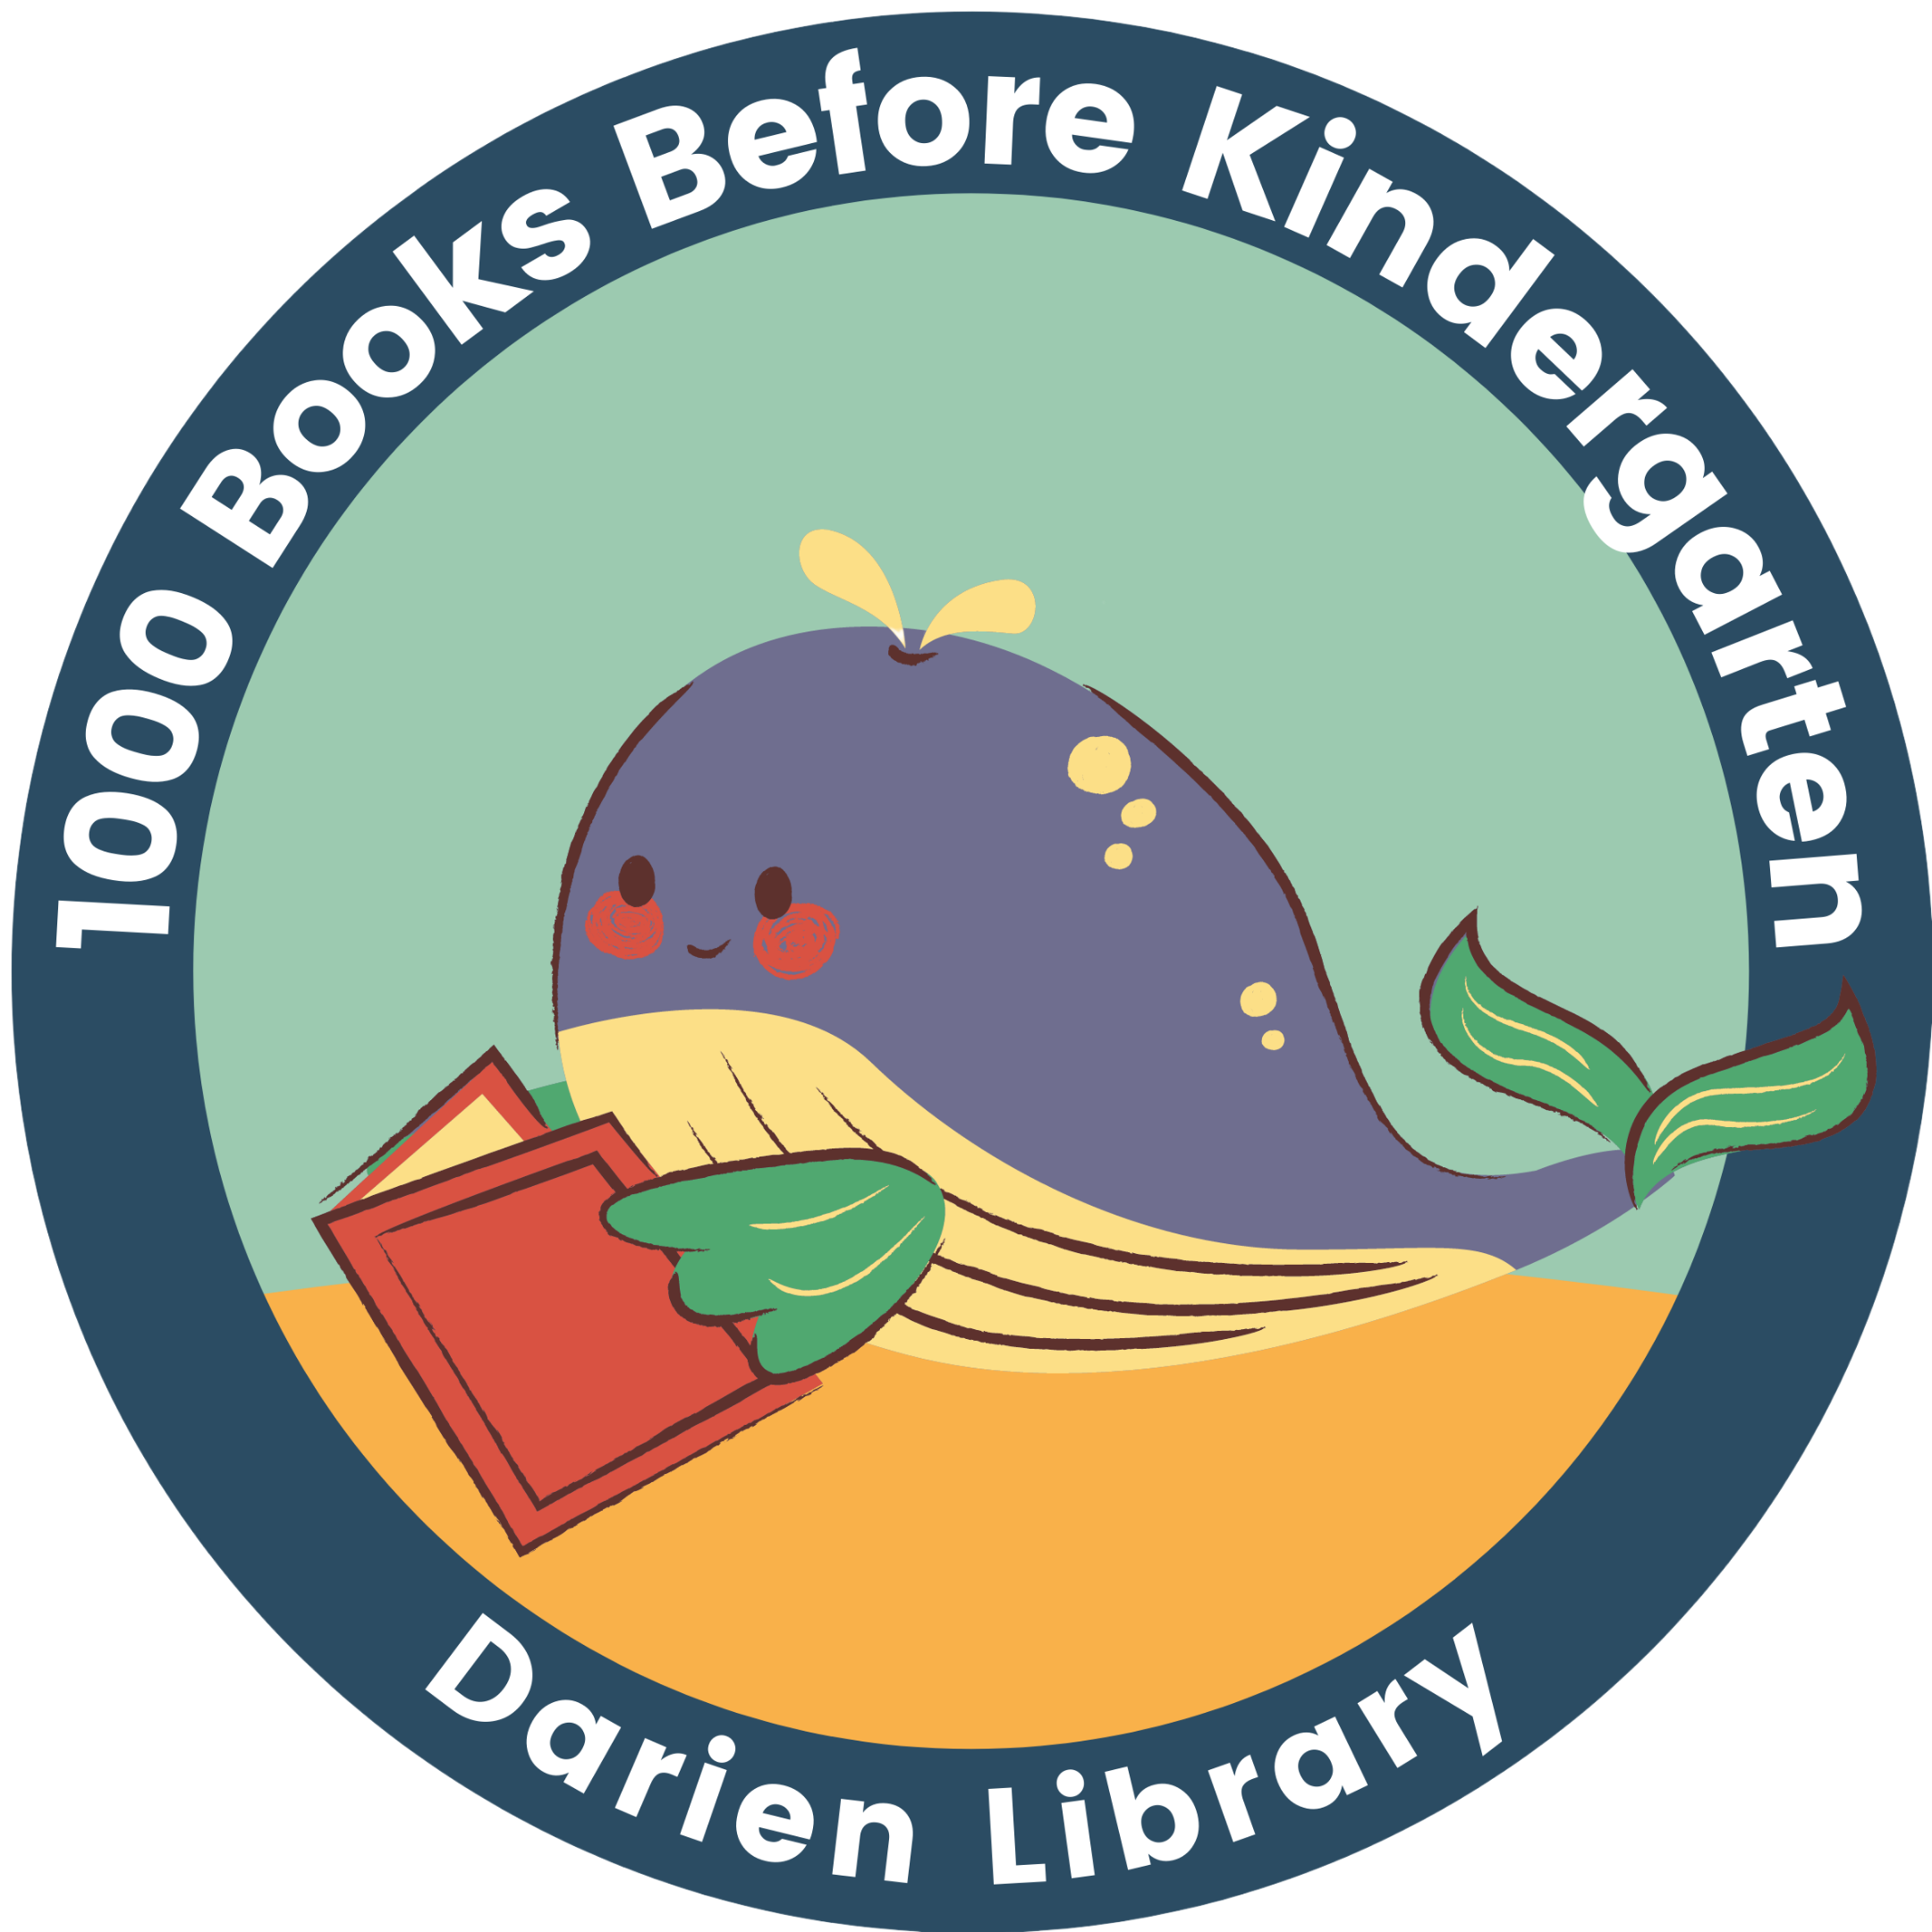 1,000 Books Before Kindergarten Darien Library whale reading a book logo